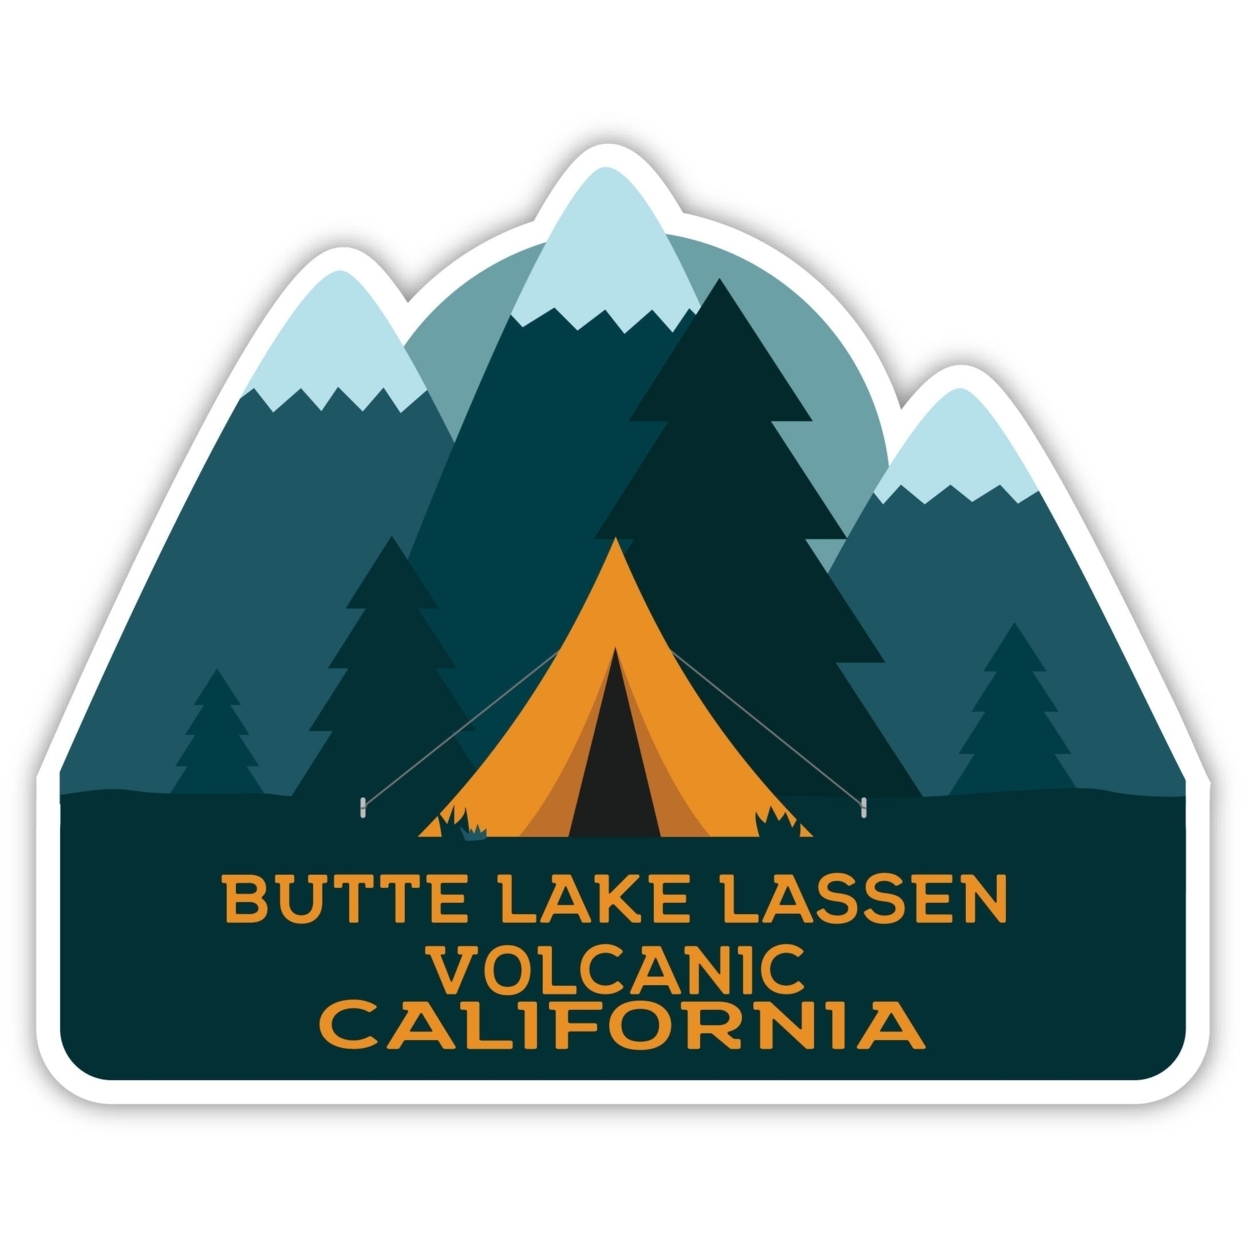 Butte Lake Lassen Volcanic California Souvenir Decorative Stickers (Choose Theme And Size) - 4-Pack, 2-Inch, Tent